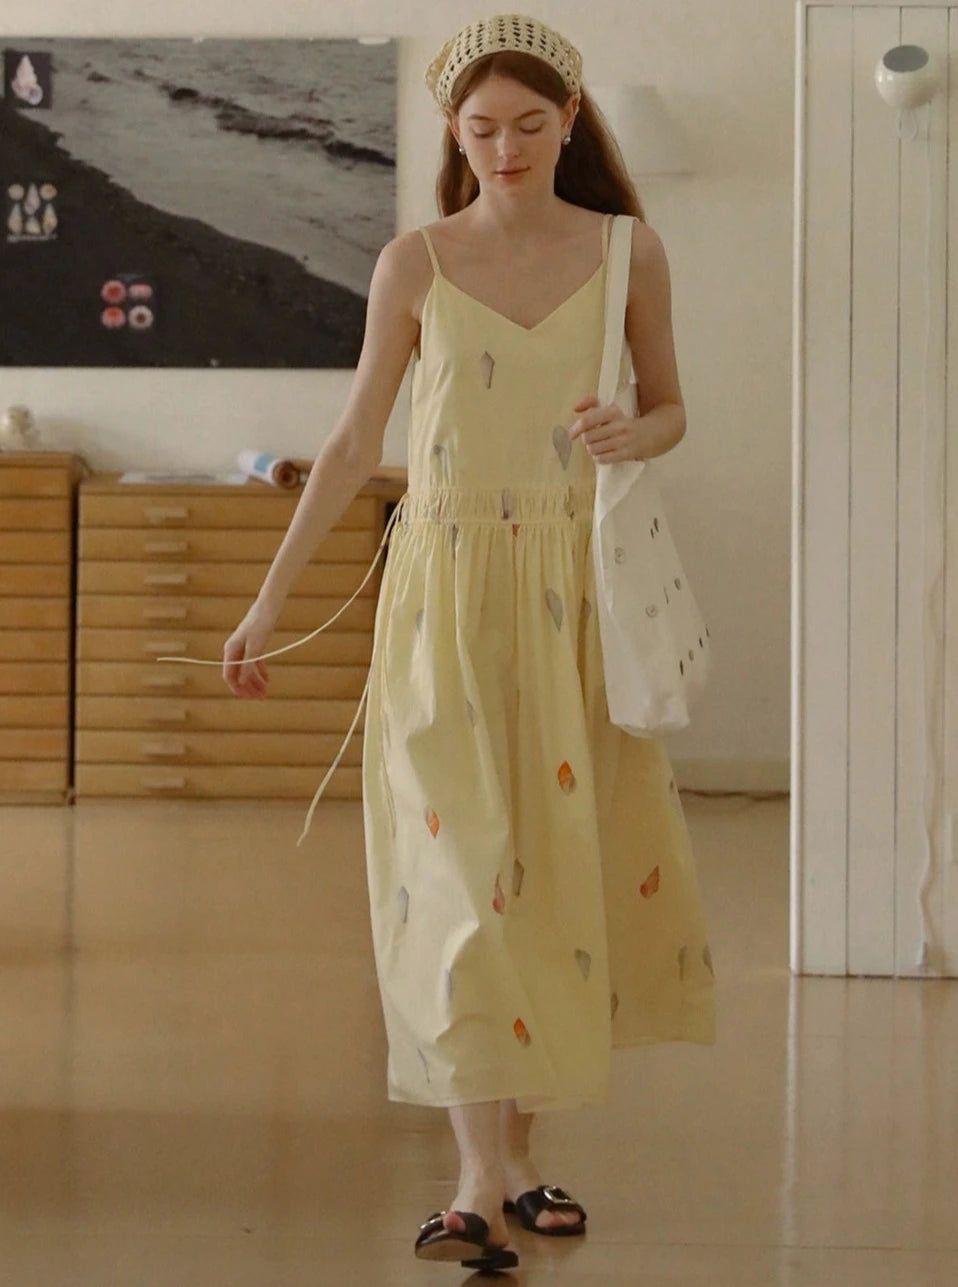 Vintage French Shell Print Dress